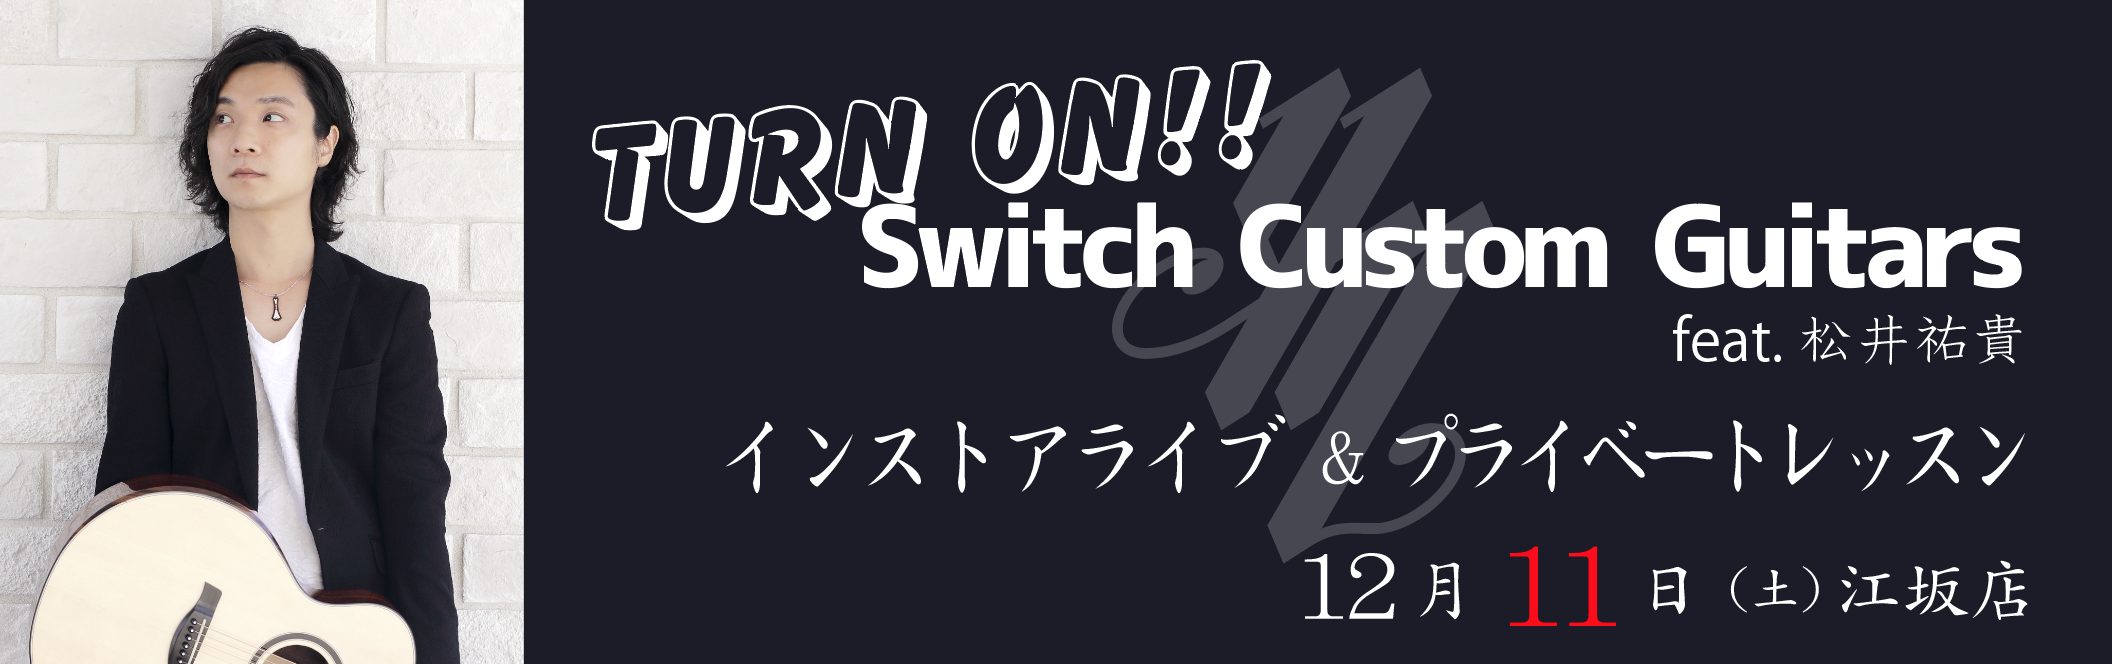 TURN ON! Switch Custom Guitars feat.松井祐貴のバナー